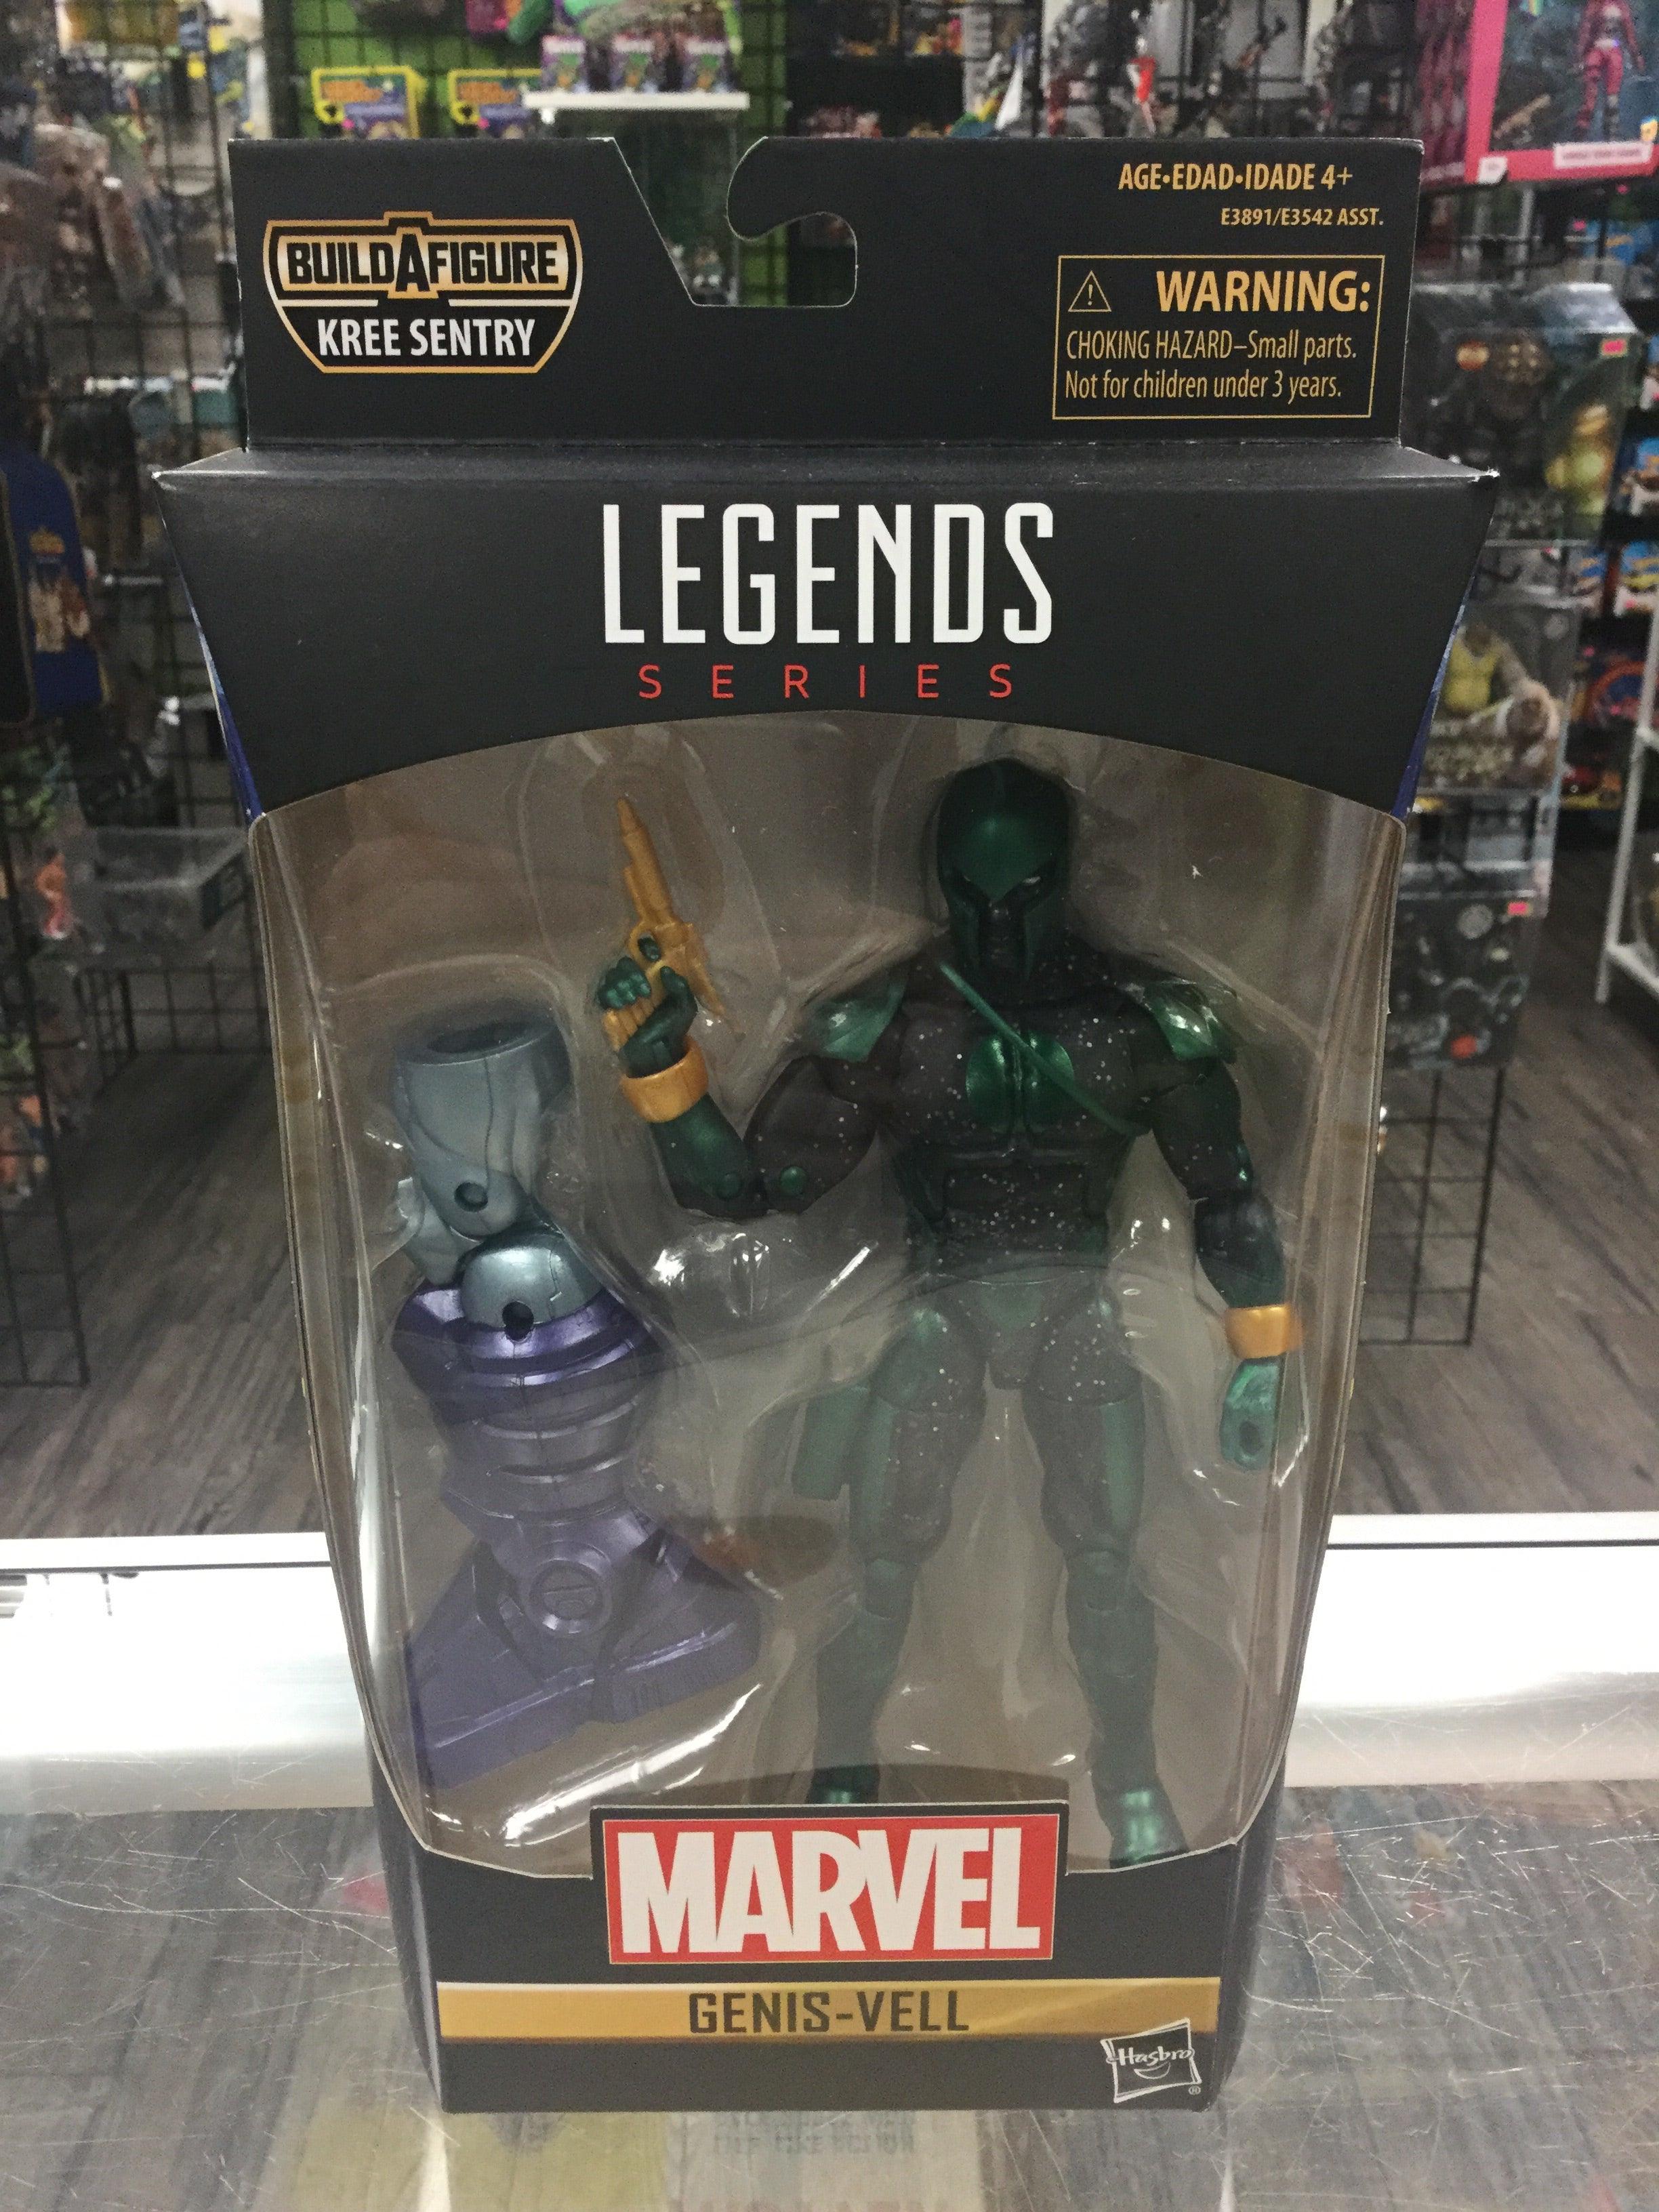 Marvel Legends Captain Marvel Kree build a Figure Wave Genis-Vell Hasbro - Rogue Toys